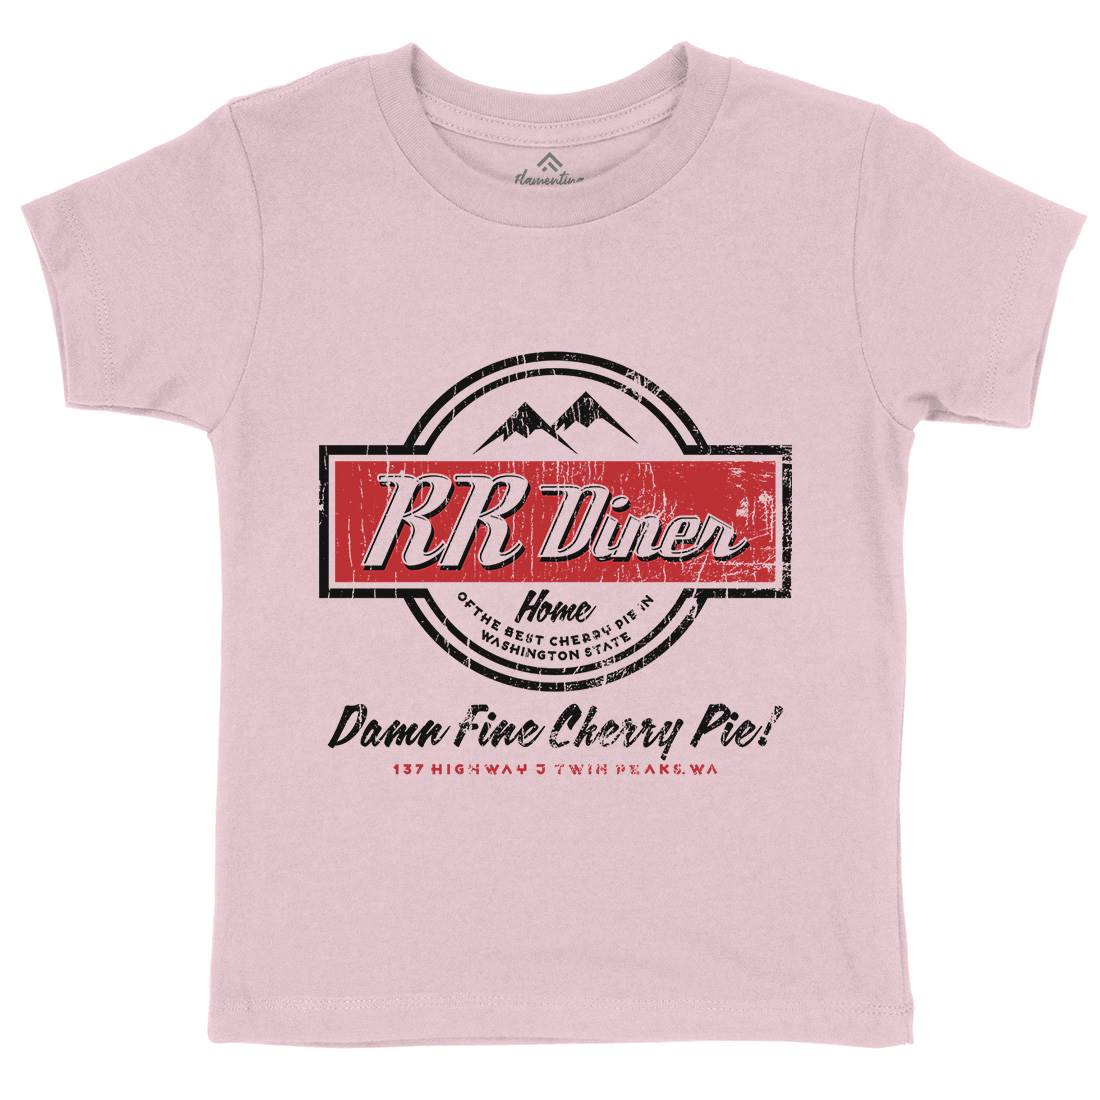 Double Rr Diner Kids Crew Neck T-Shirt Horror D335